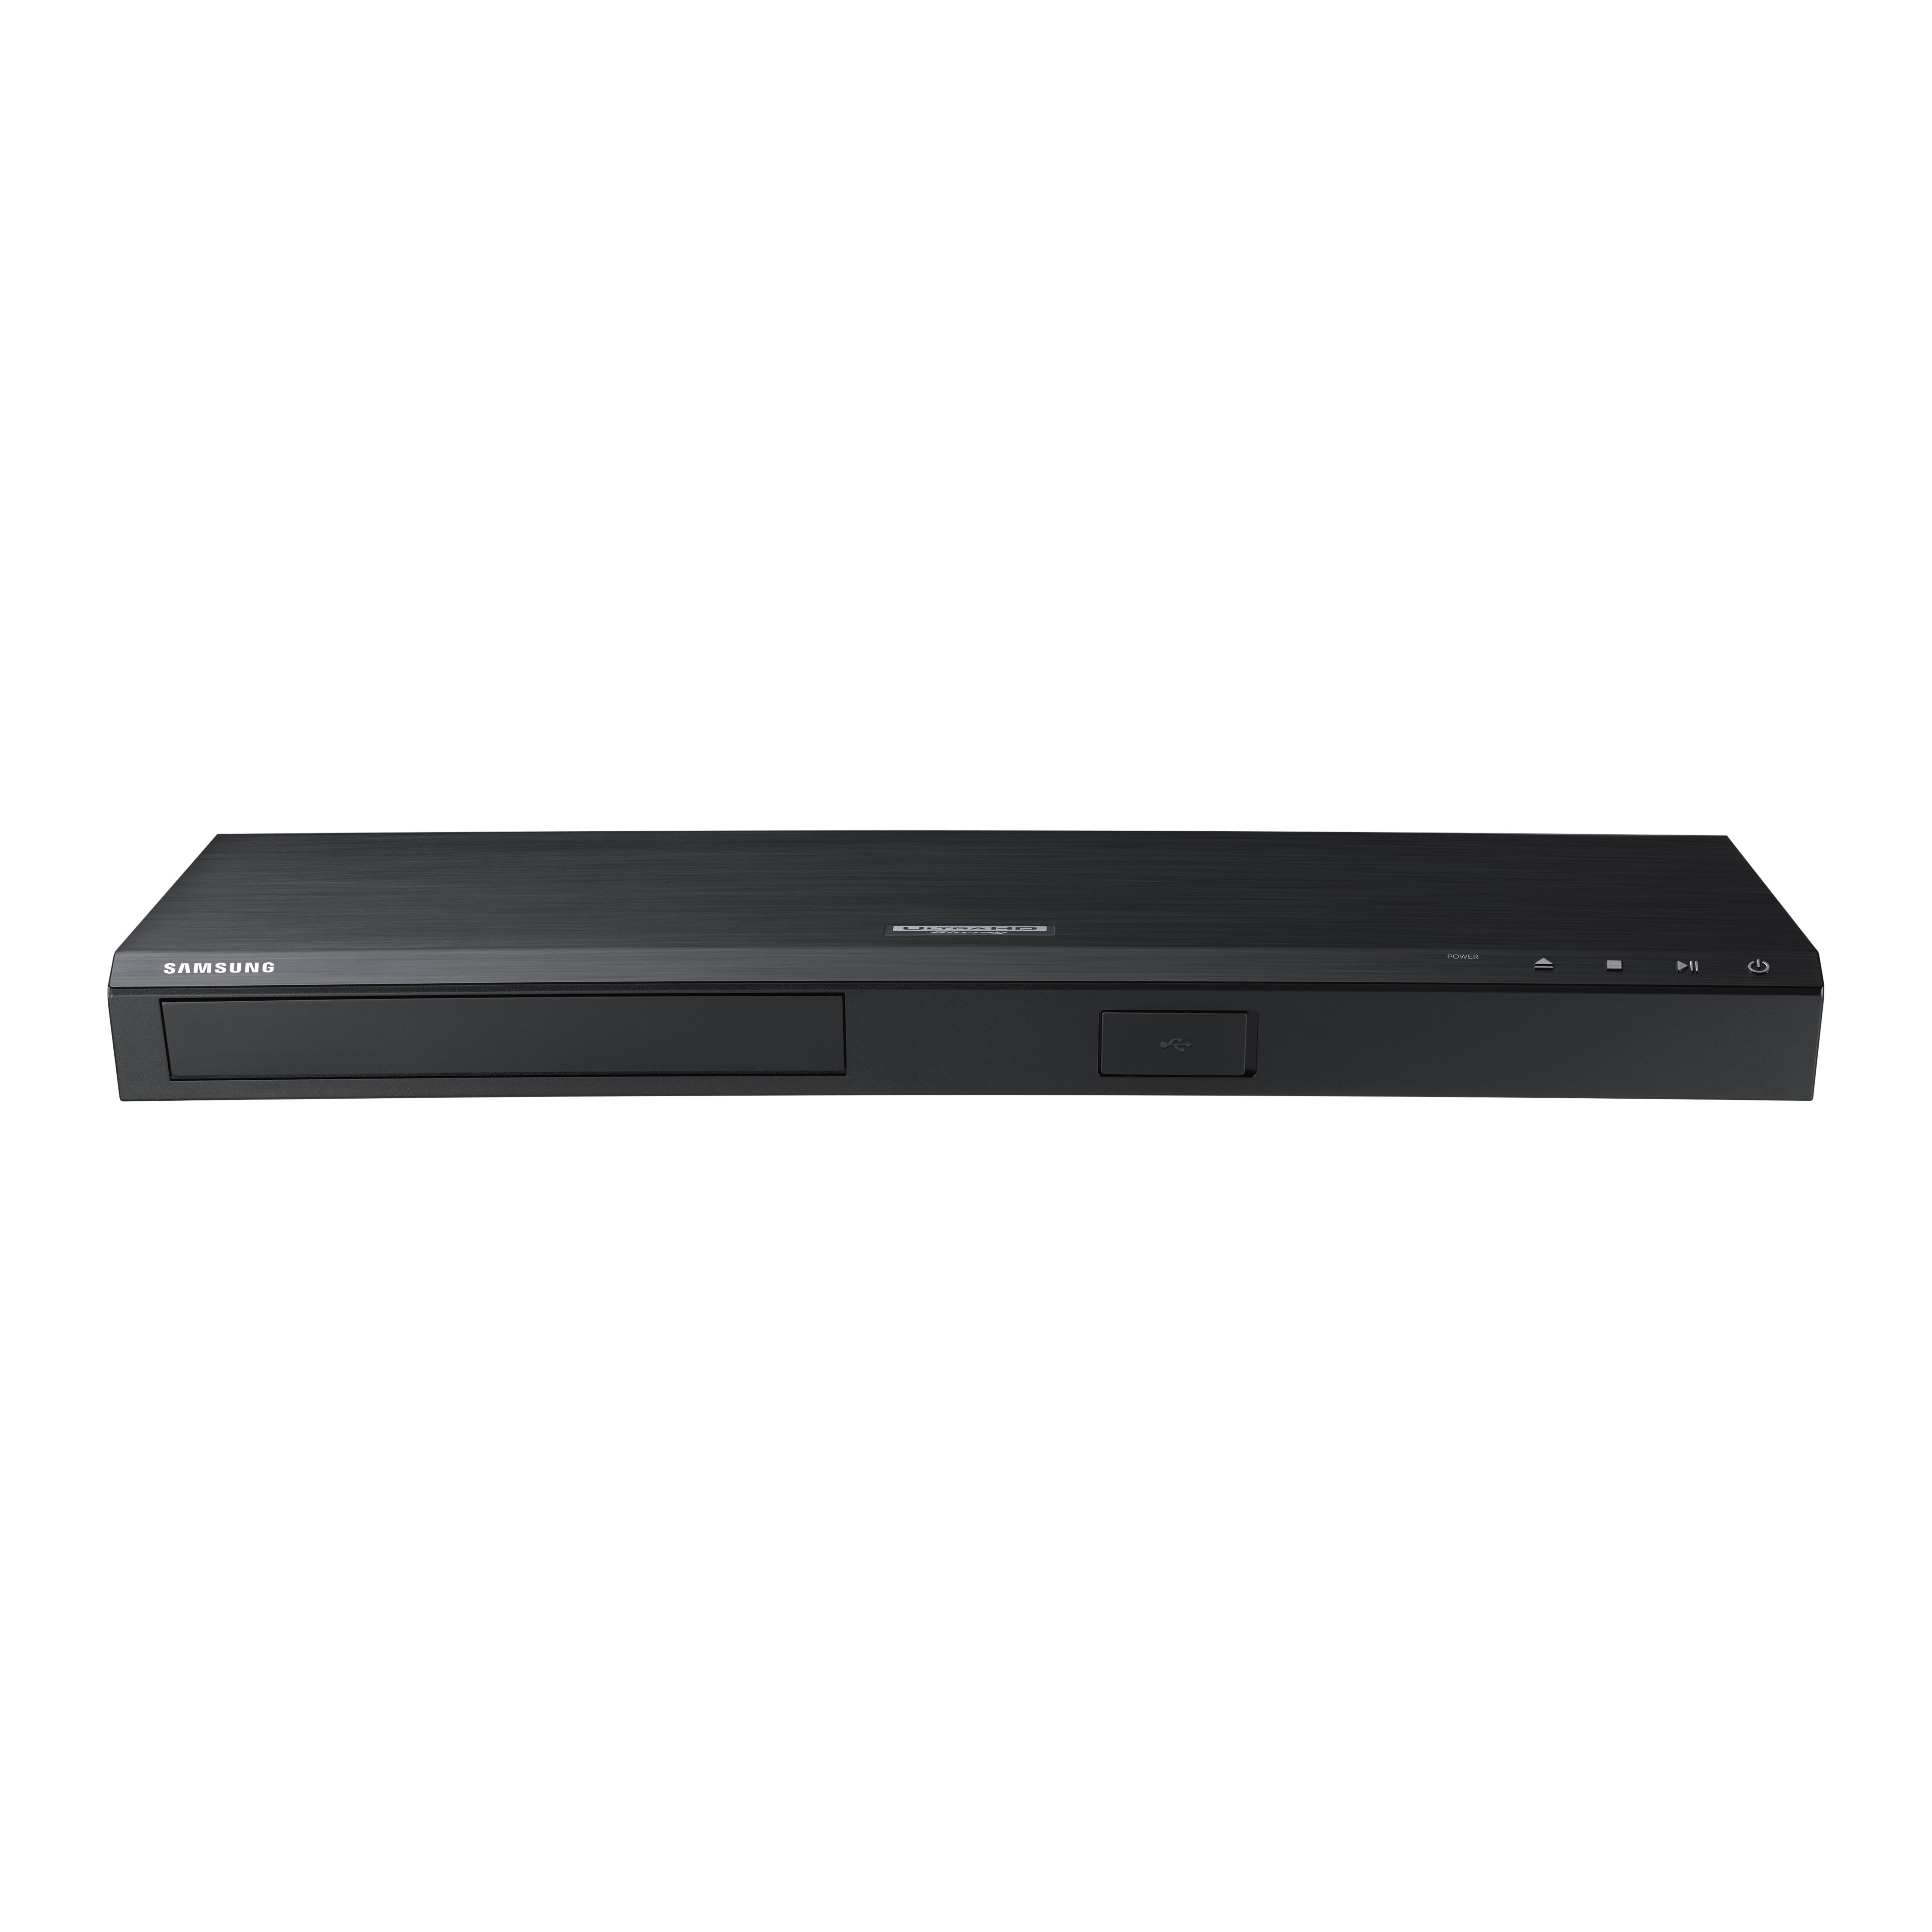 Samsung 4k Ultra Hd Blu Ray Dvd Player With Hdr And Wifi Streaming Ubd M7500 Walmart Com Walmart Com